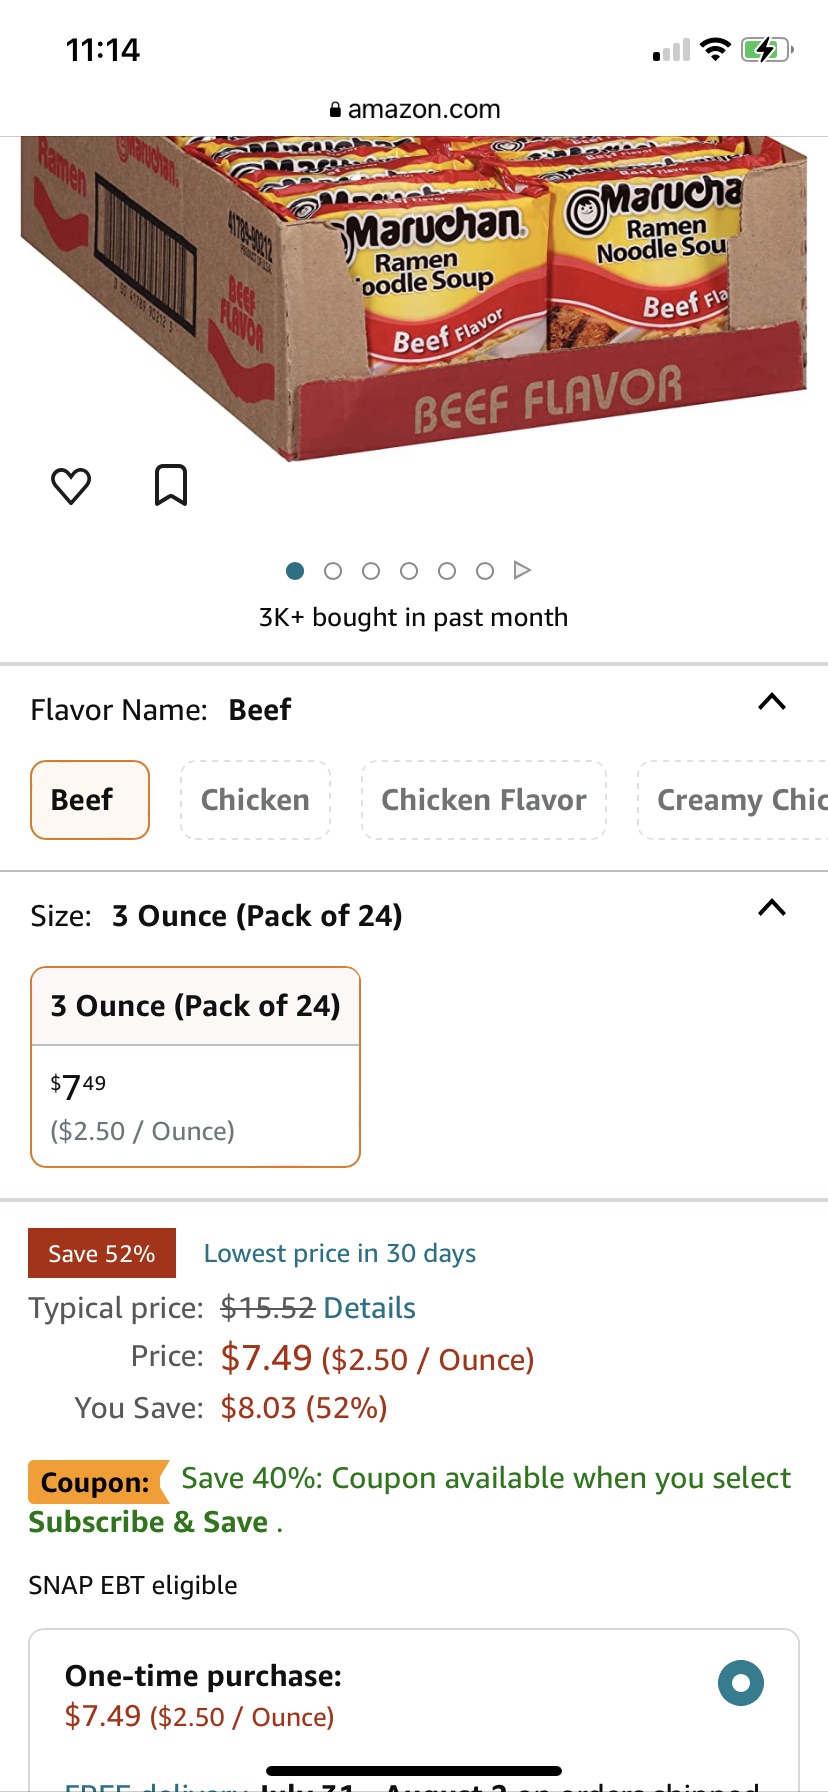 Amazon.com : Maruchan Ramen Beef, 3 Ounce, Pack of 24 : Grocery & Gourmet Food牛肉泡面 续订